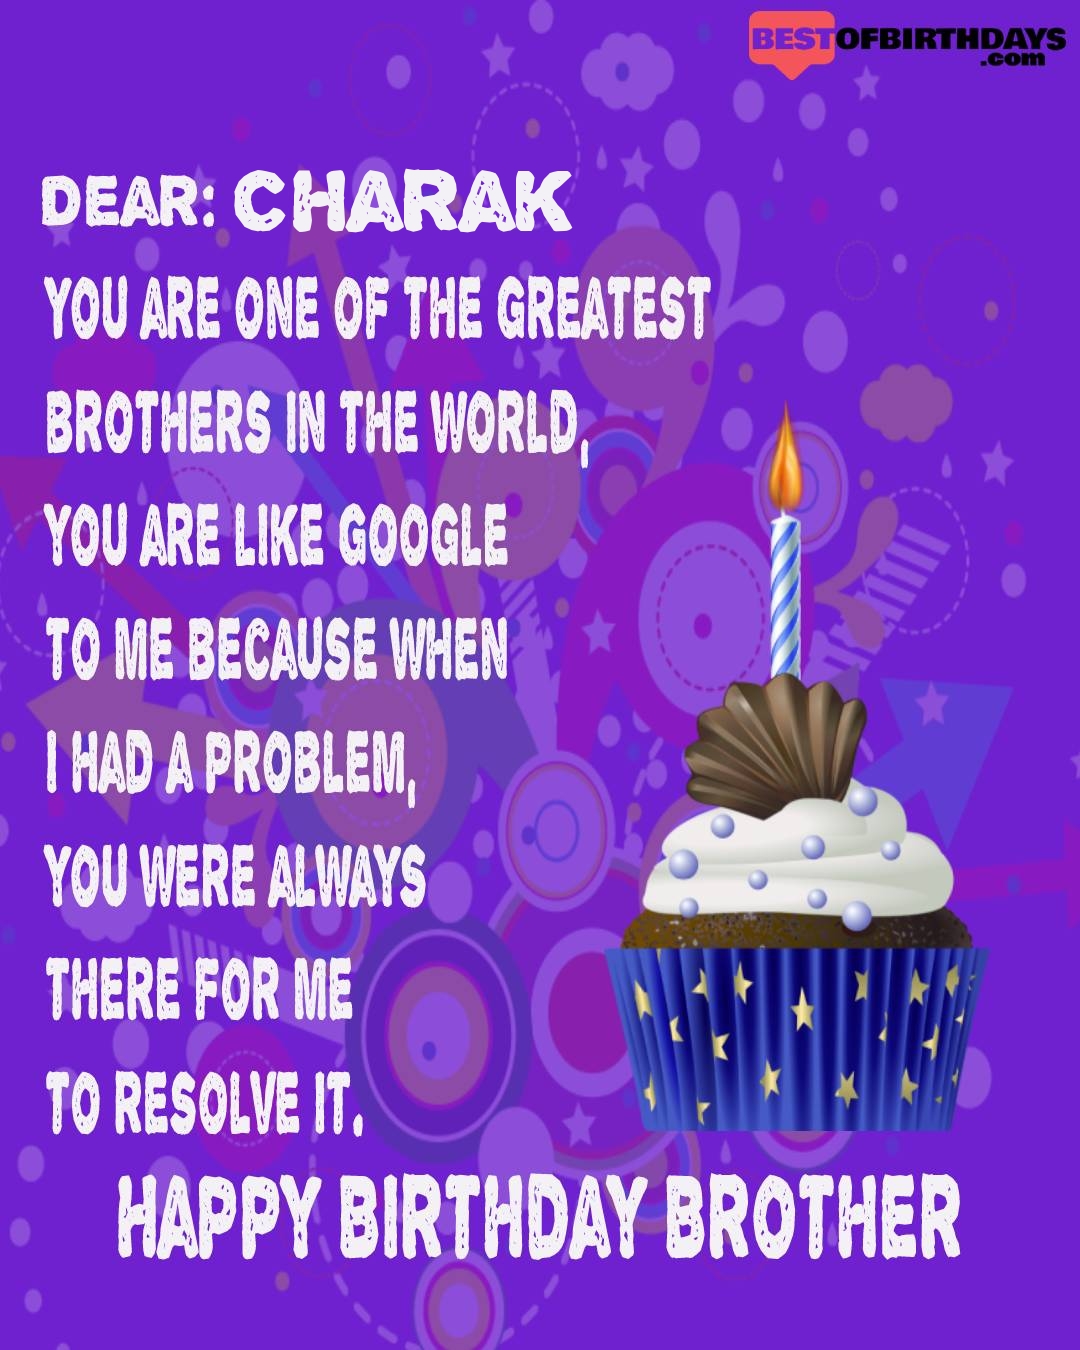 Happy birthday charak bhai brother bro